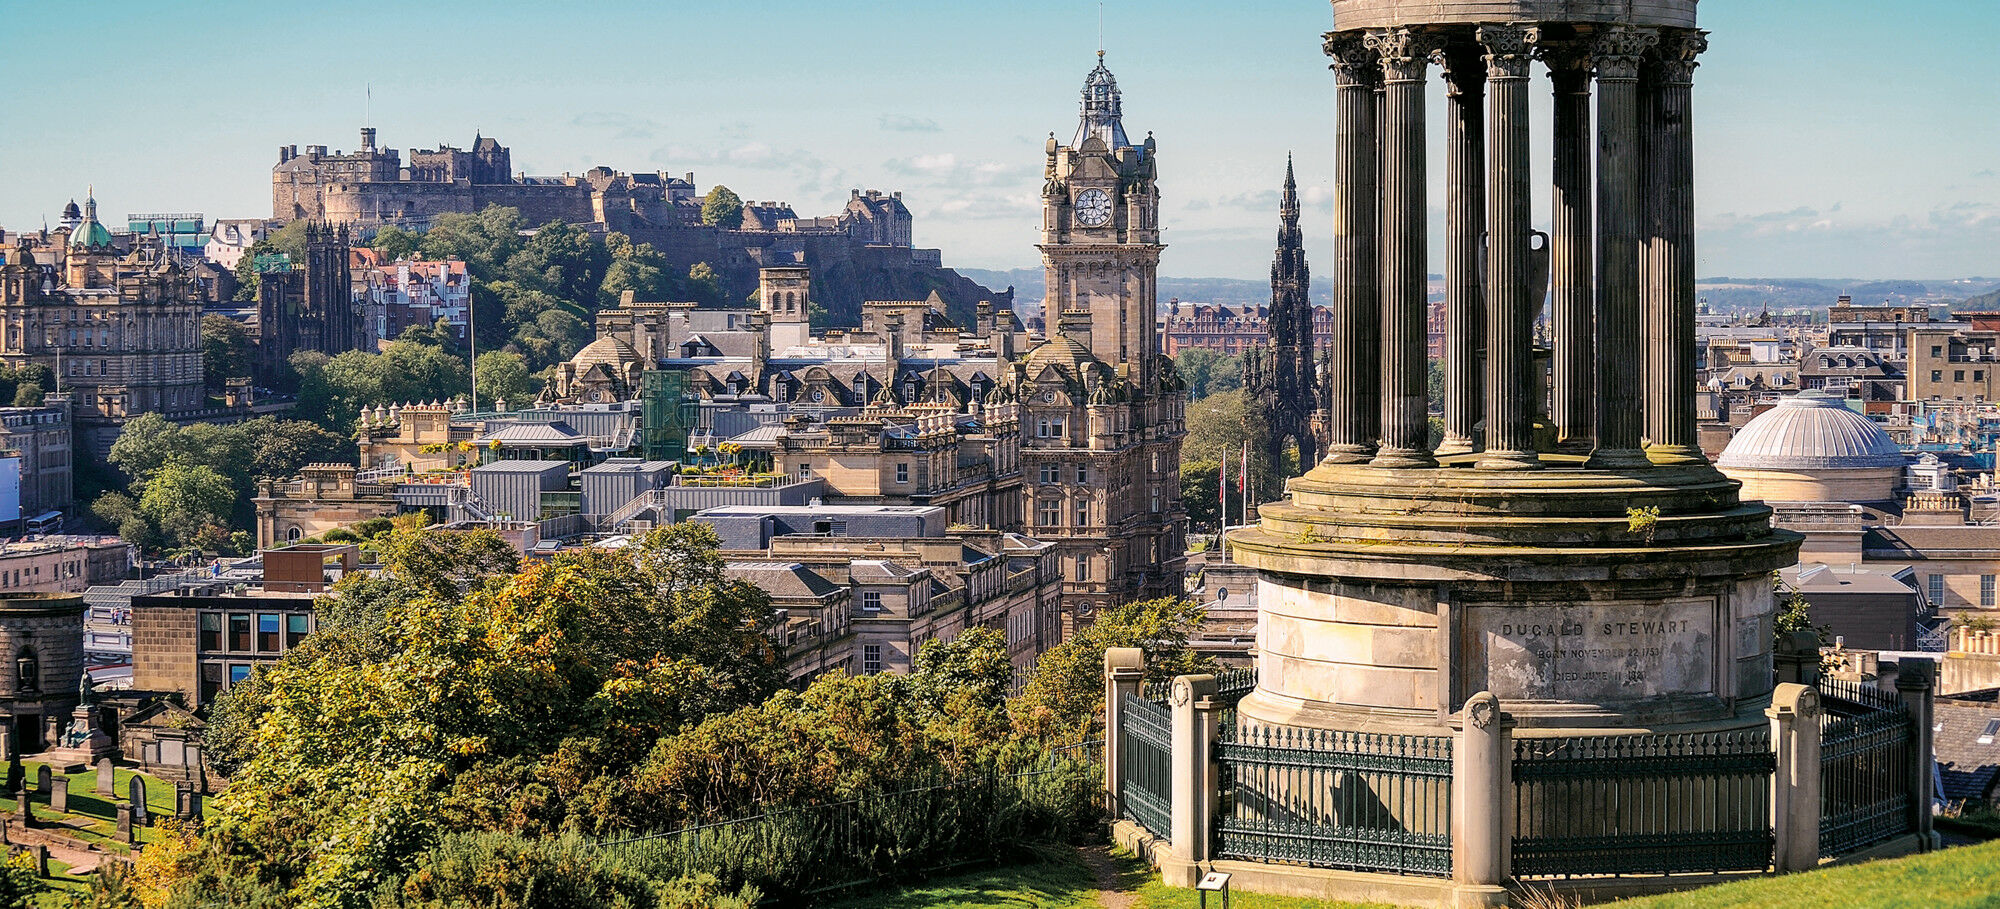 Edinburgh – The Full Scottish Experience